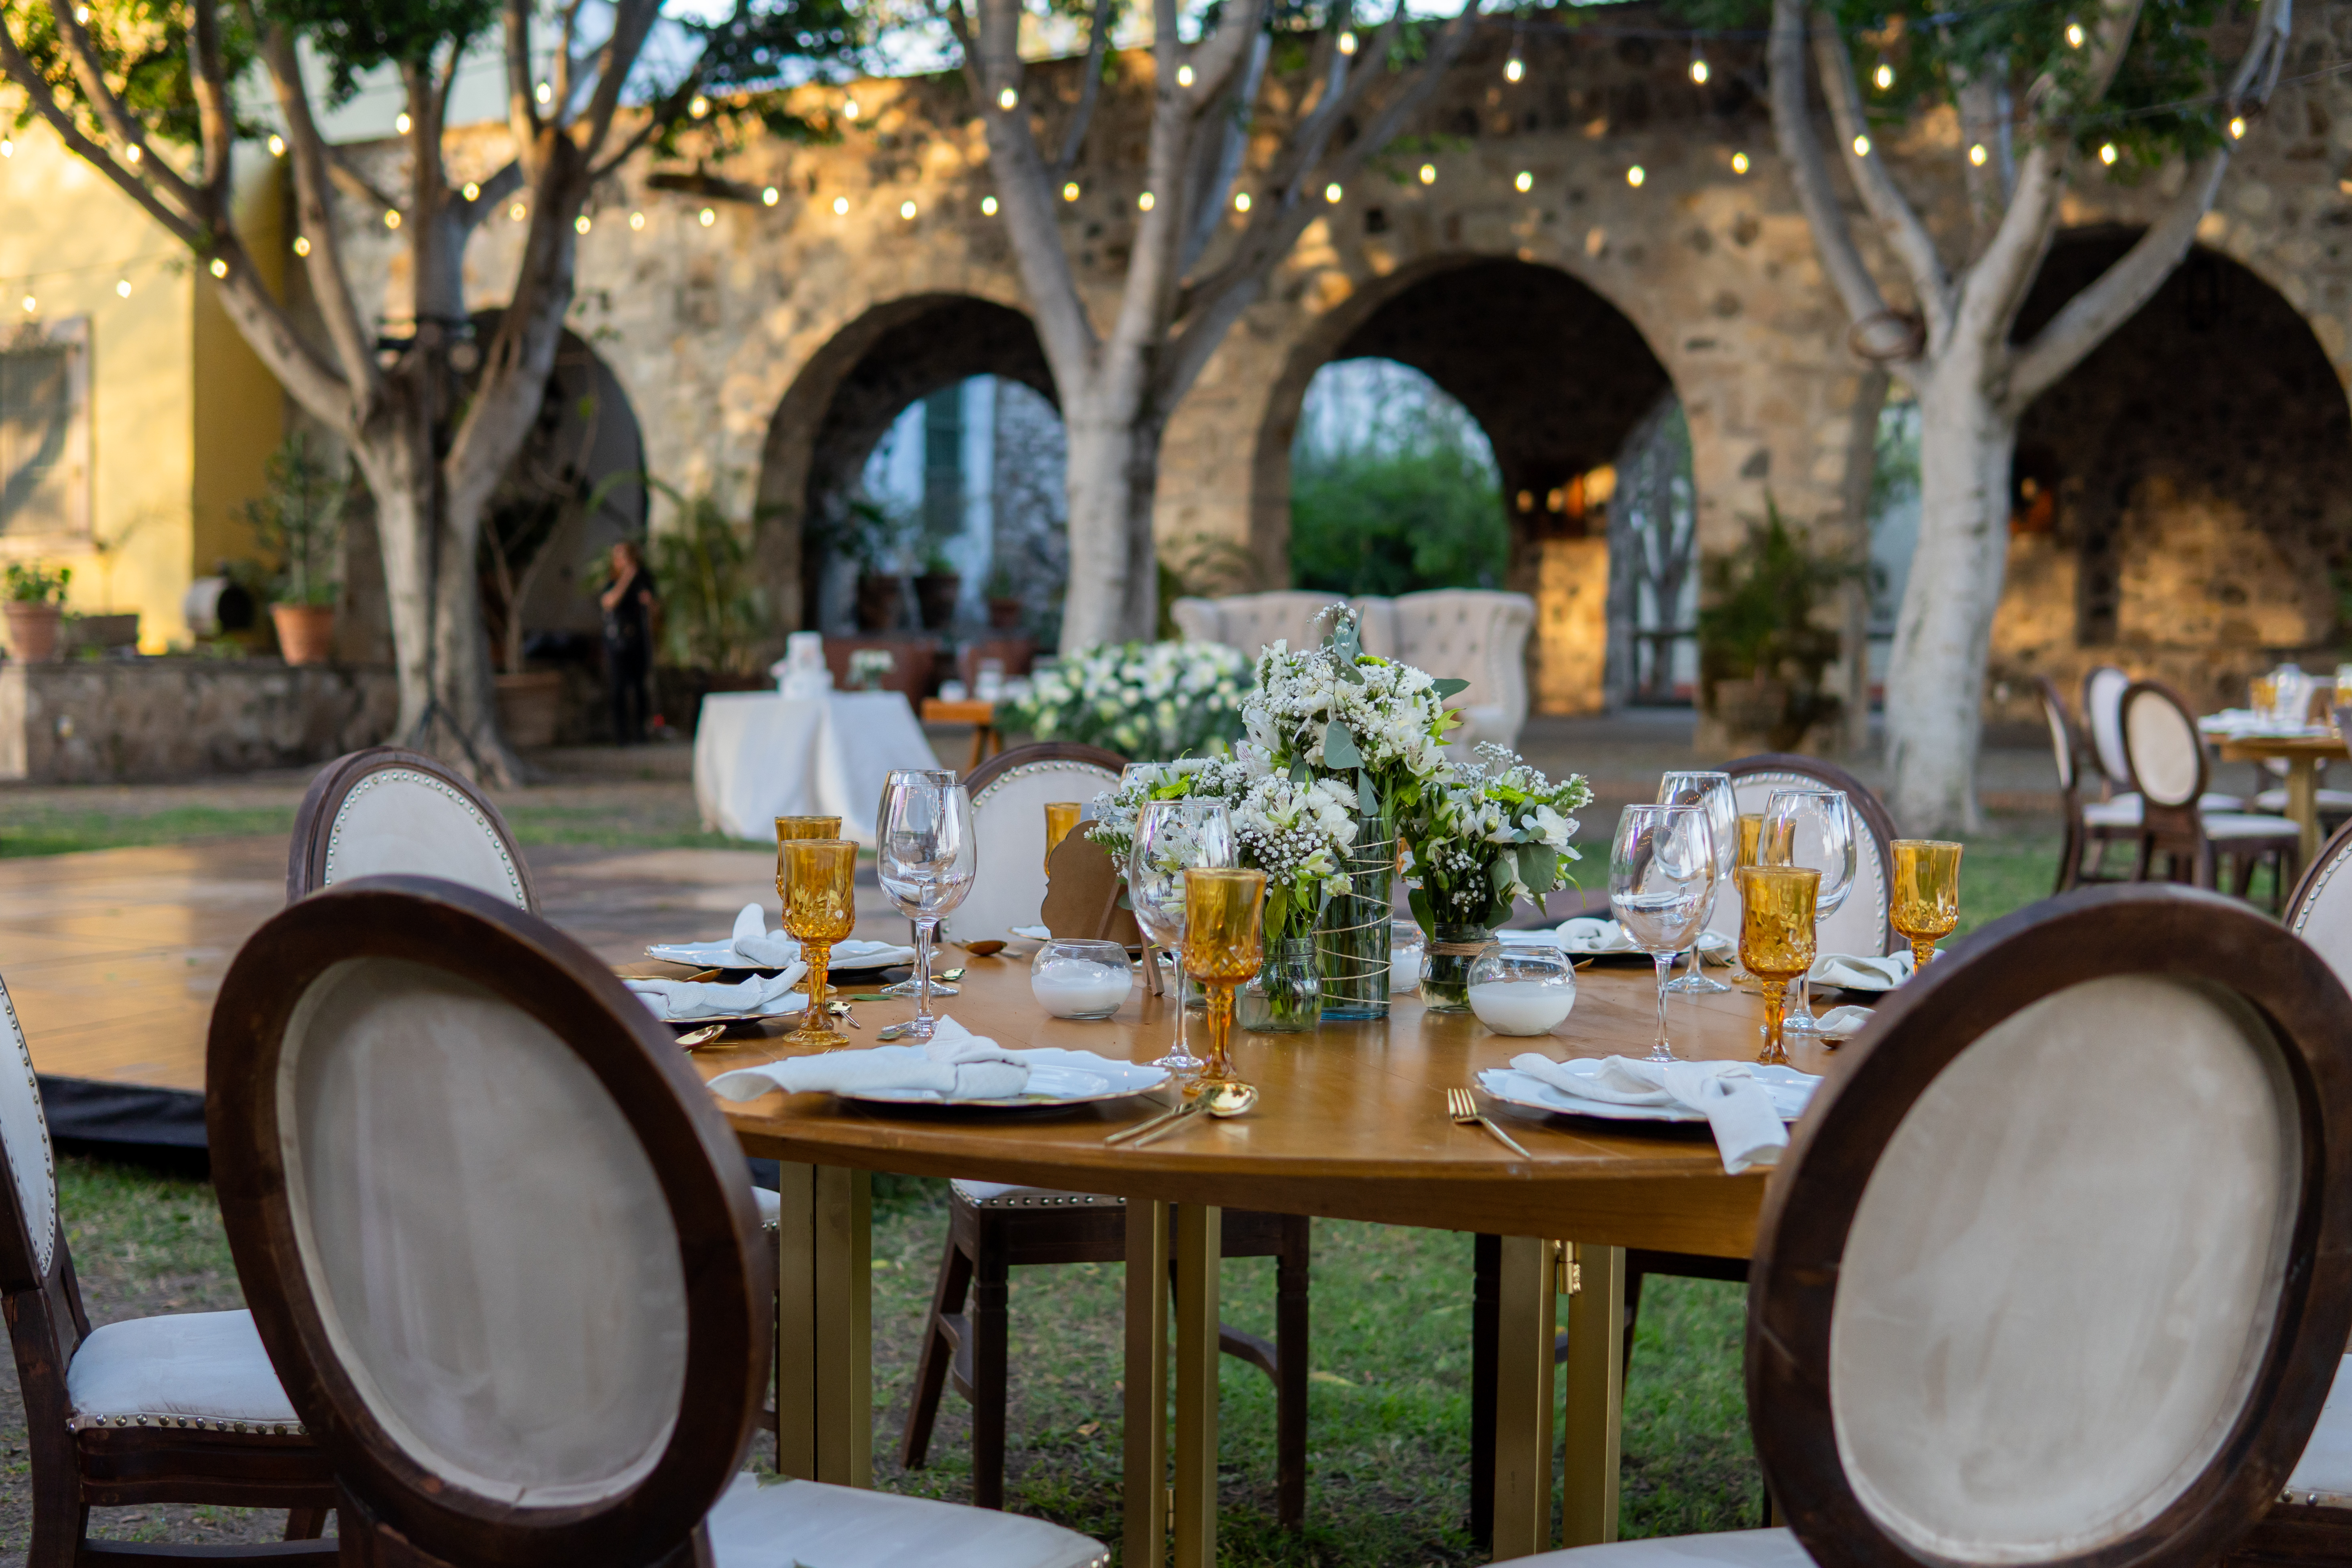 Elegant table arrangements at your destination wedding